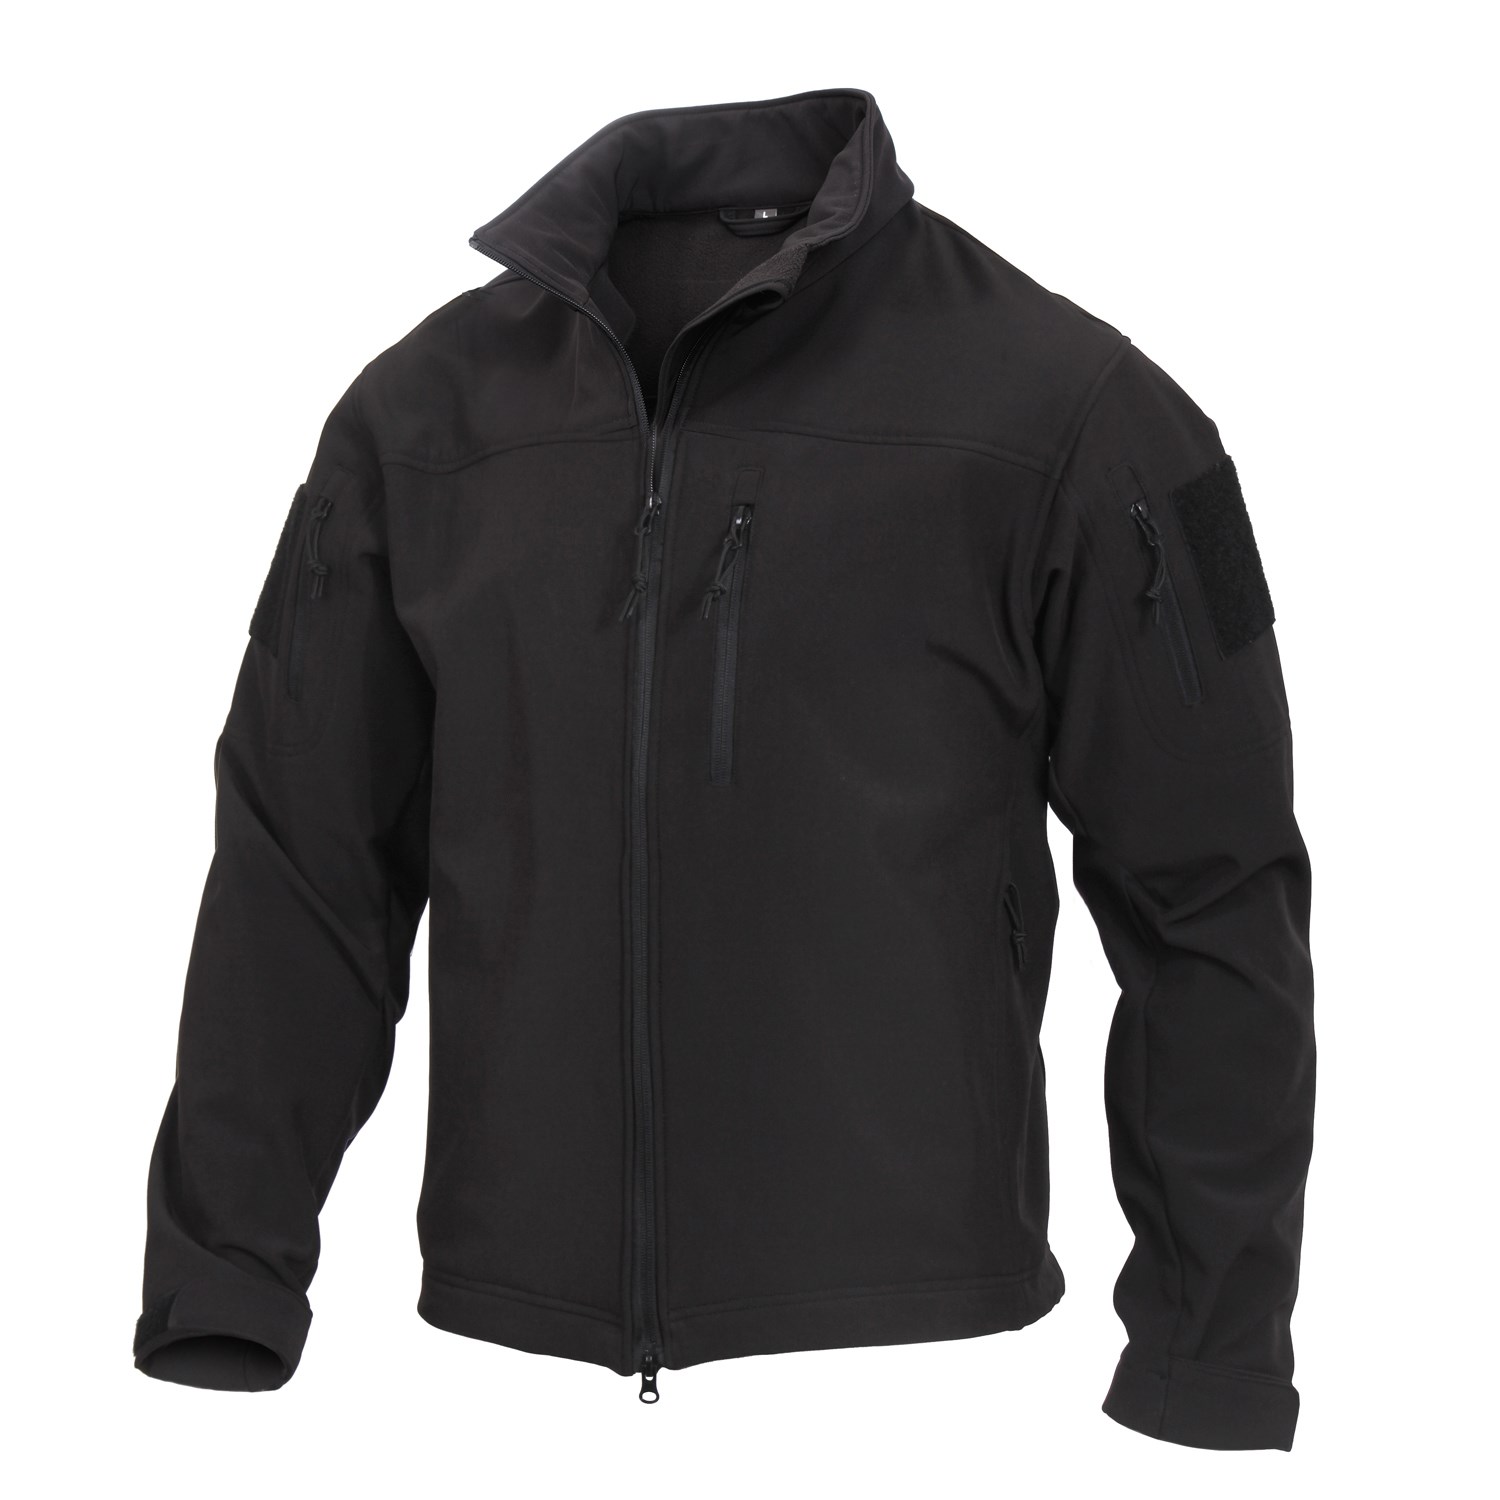 Softshell jacket STEALTH OPS BLACK ROTHCO 3577 L-11